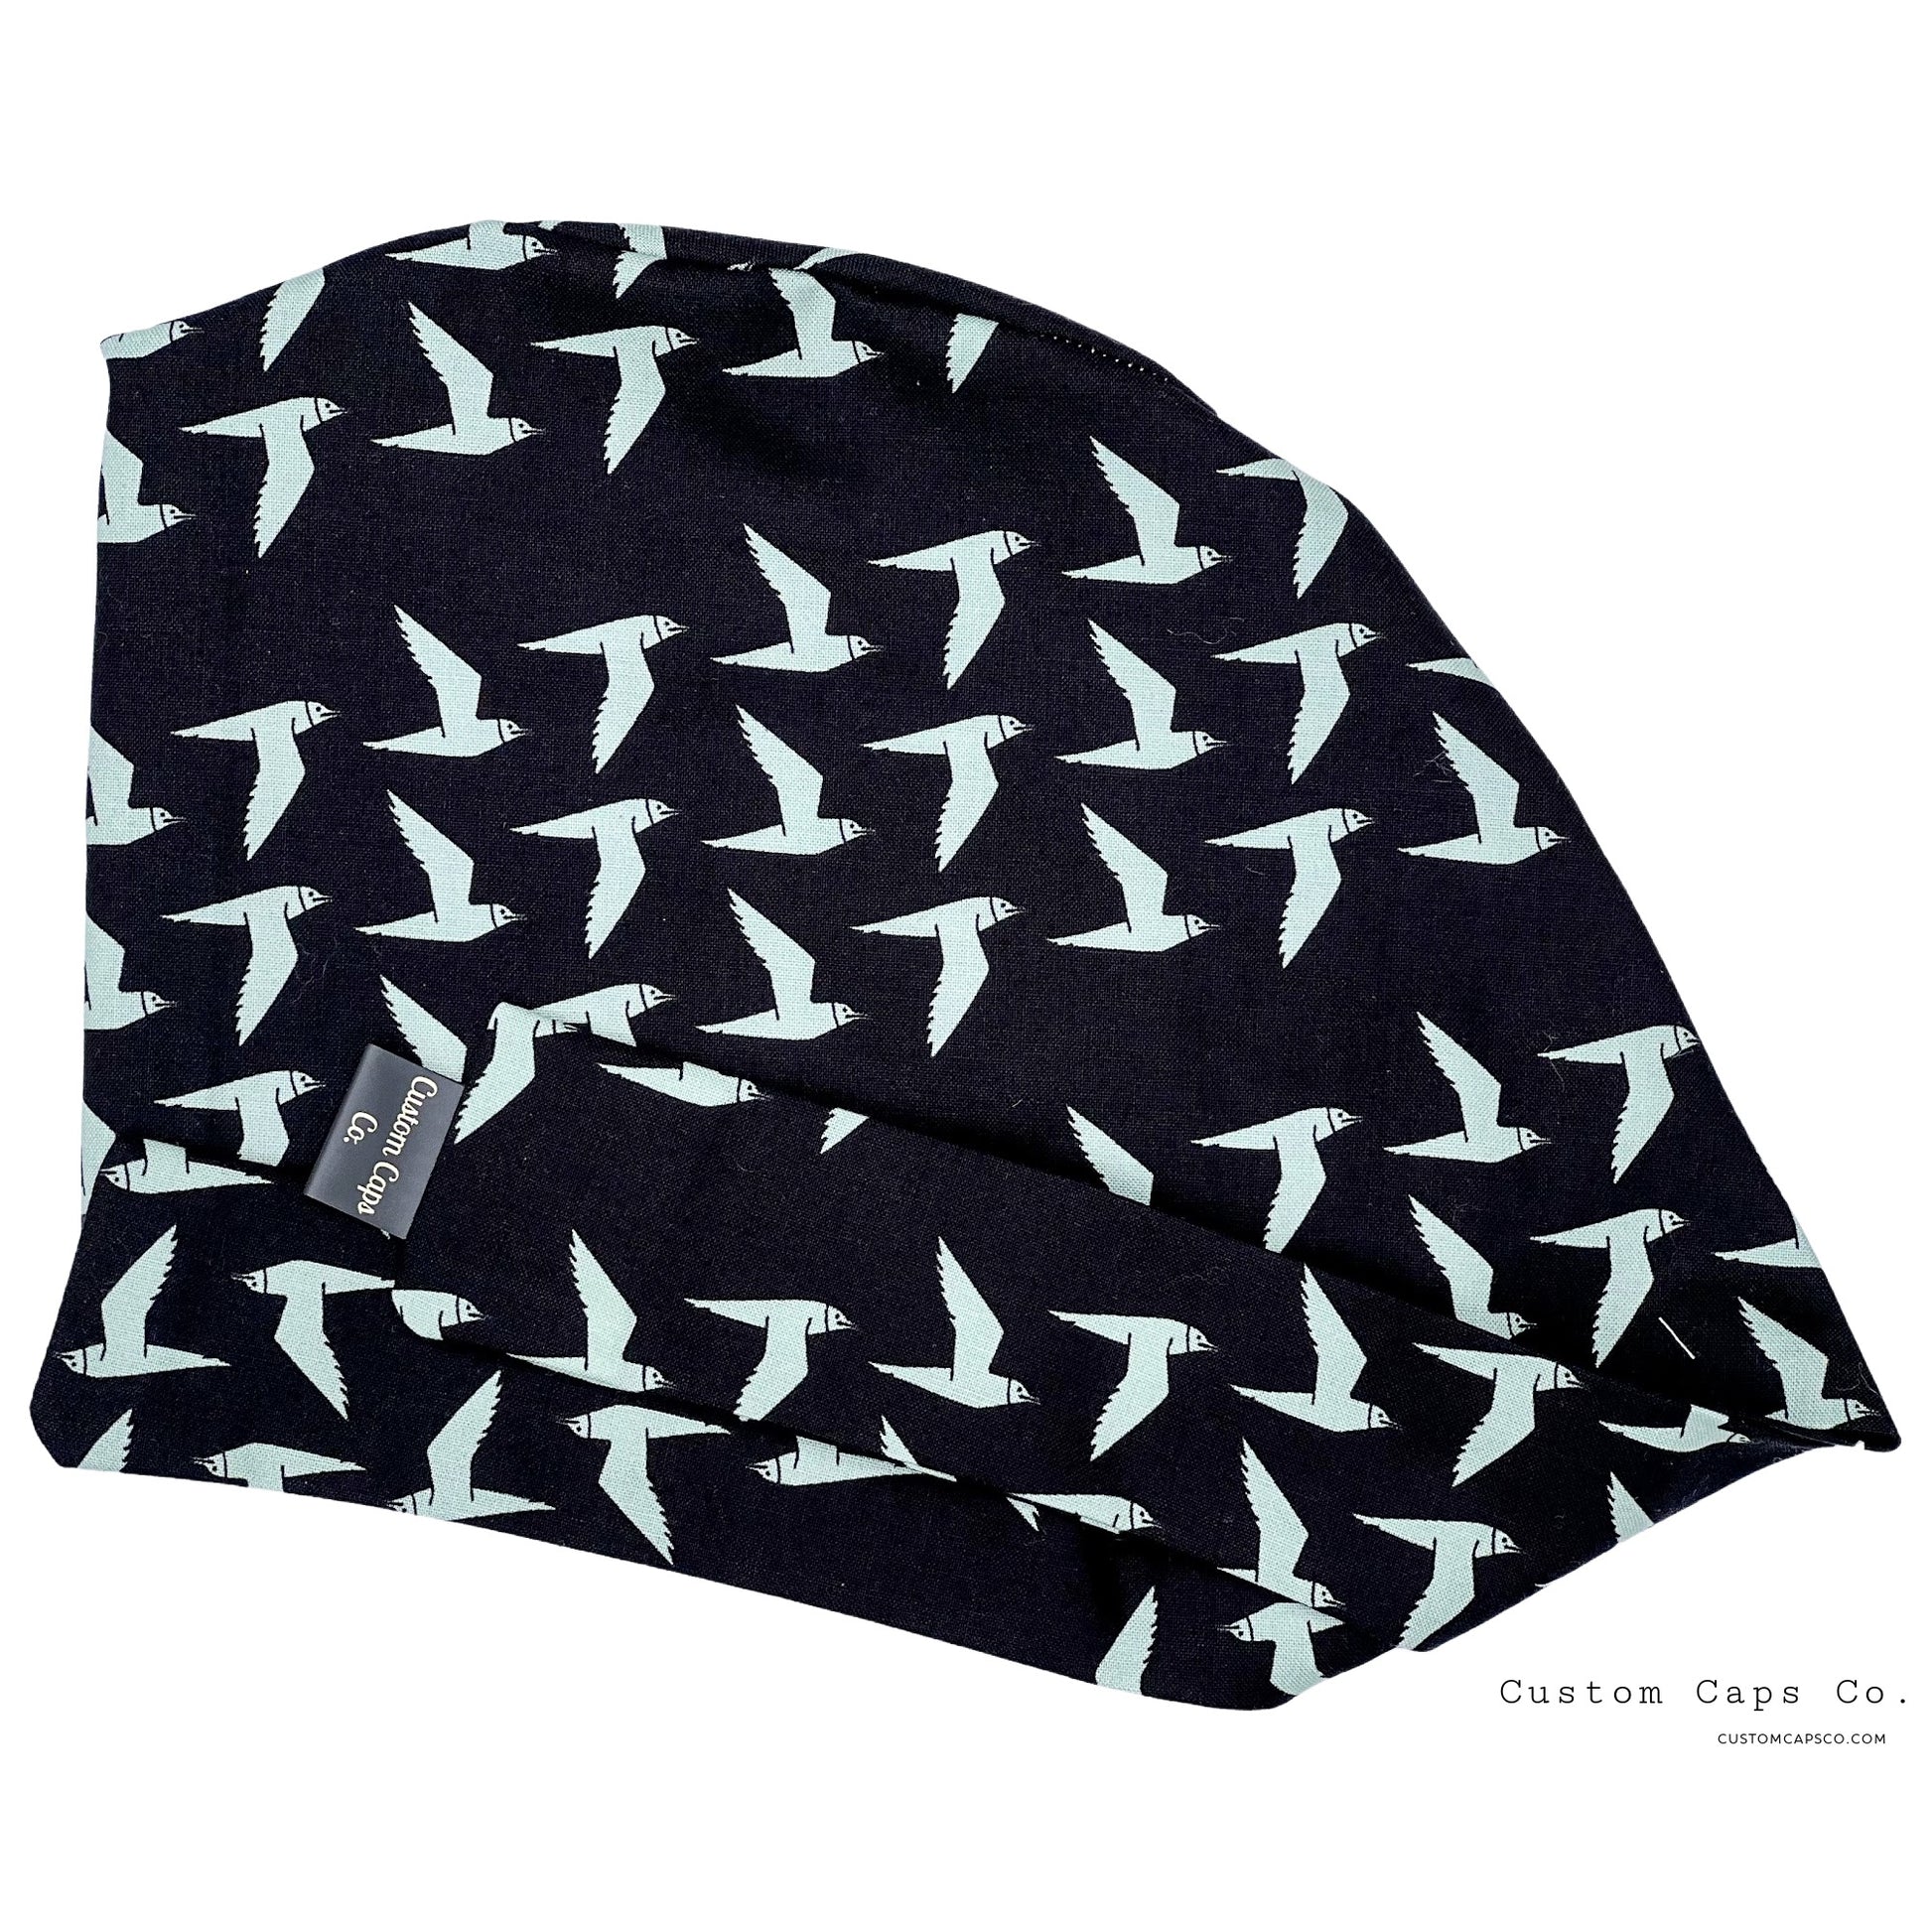 Flight Stripes on Black | Pixie - Custom Caps Co. 